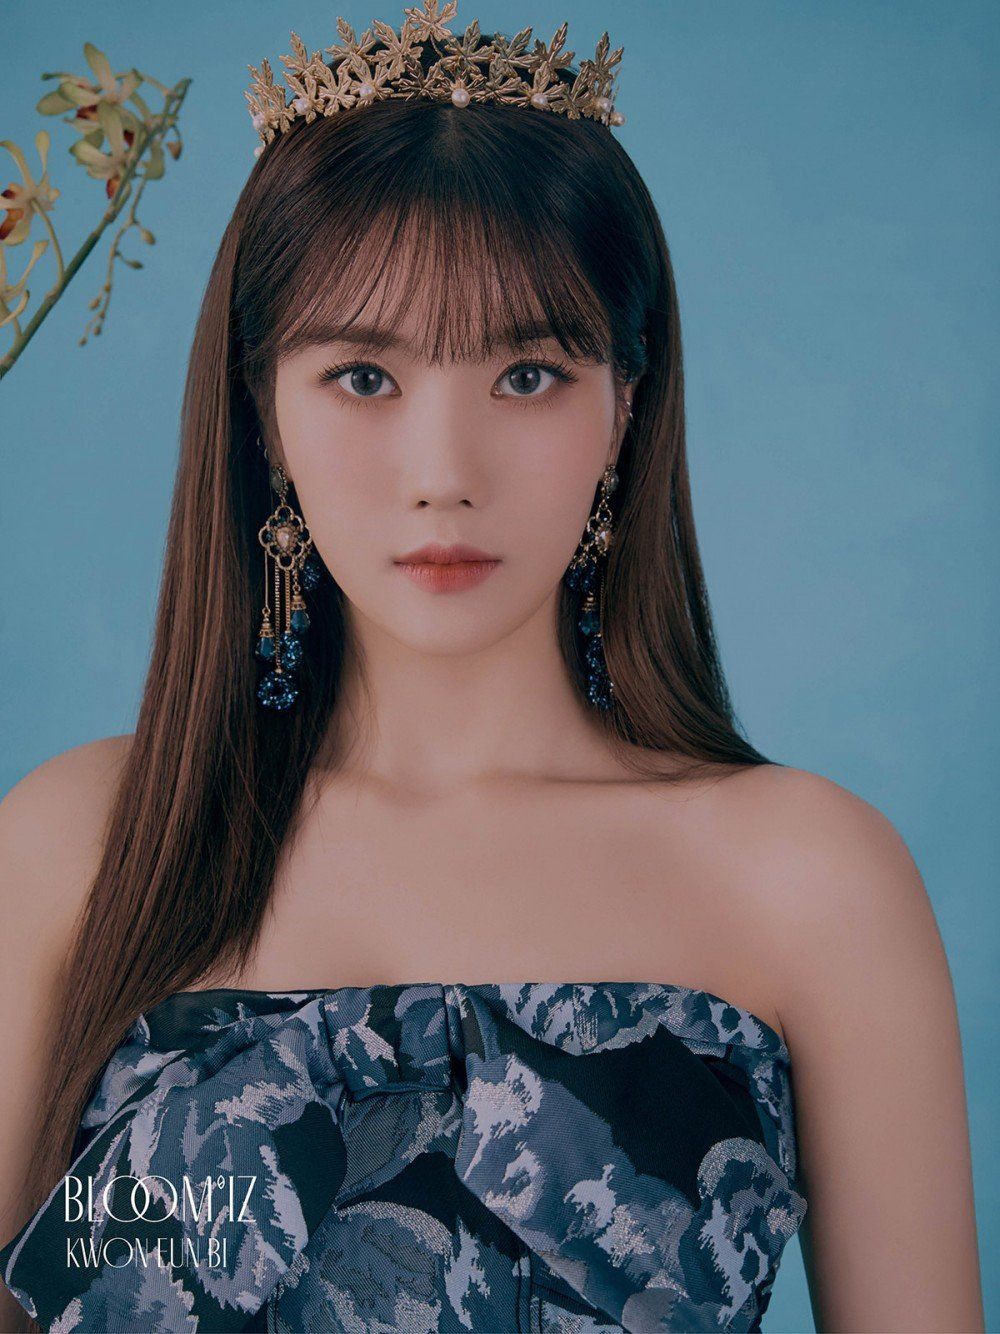 IZ*ONE reveals stunning 'BLOOM*IZ' teaser image for Eunbi